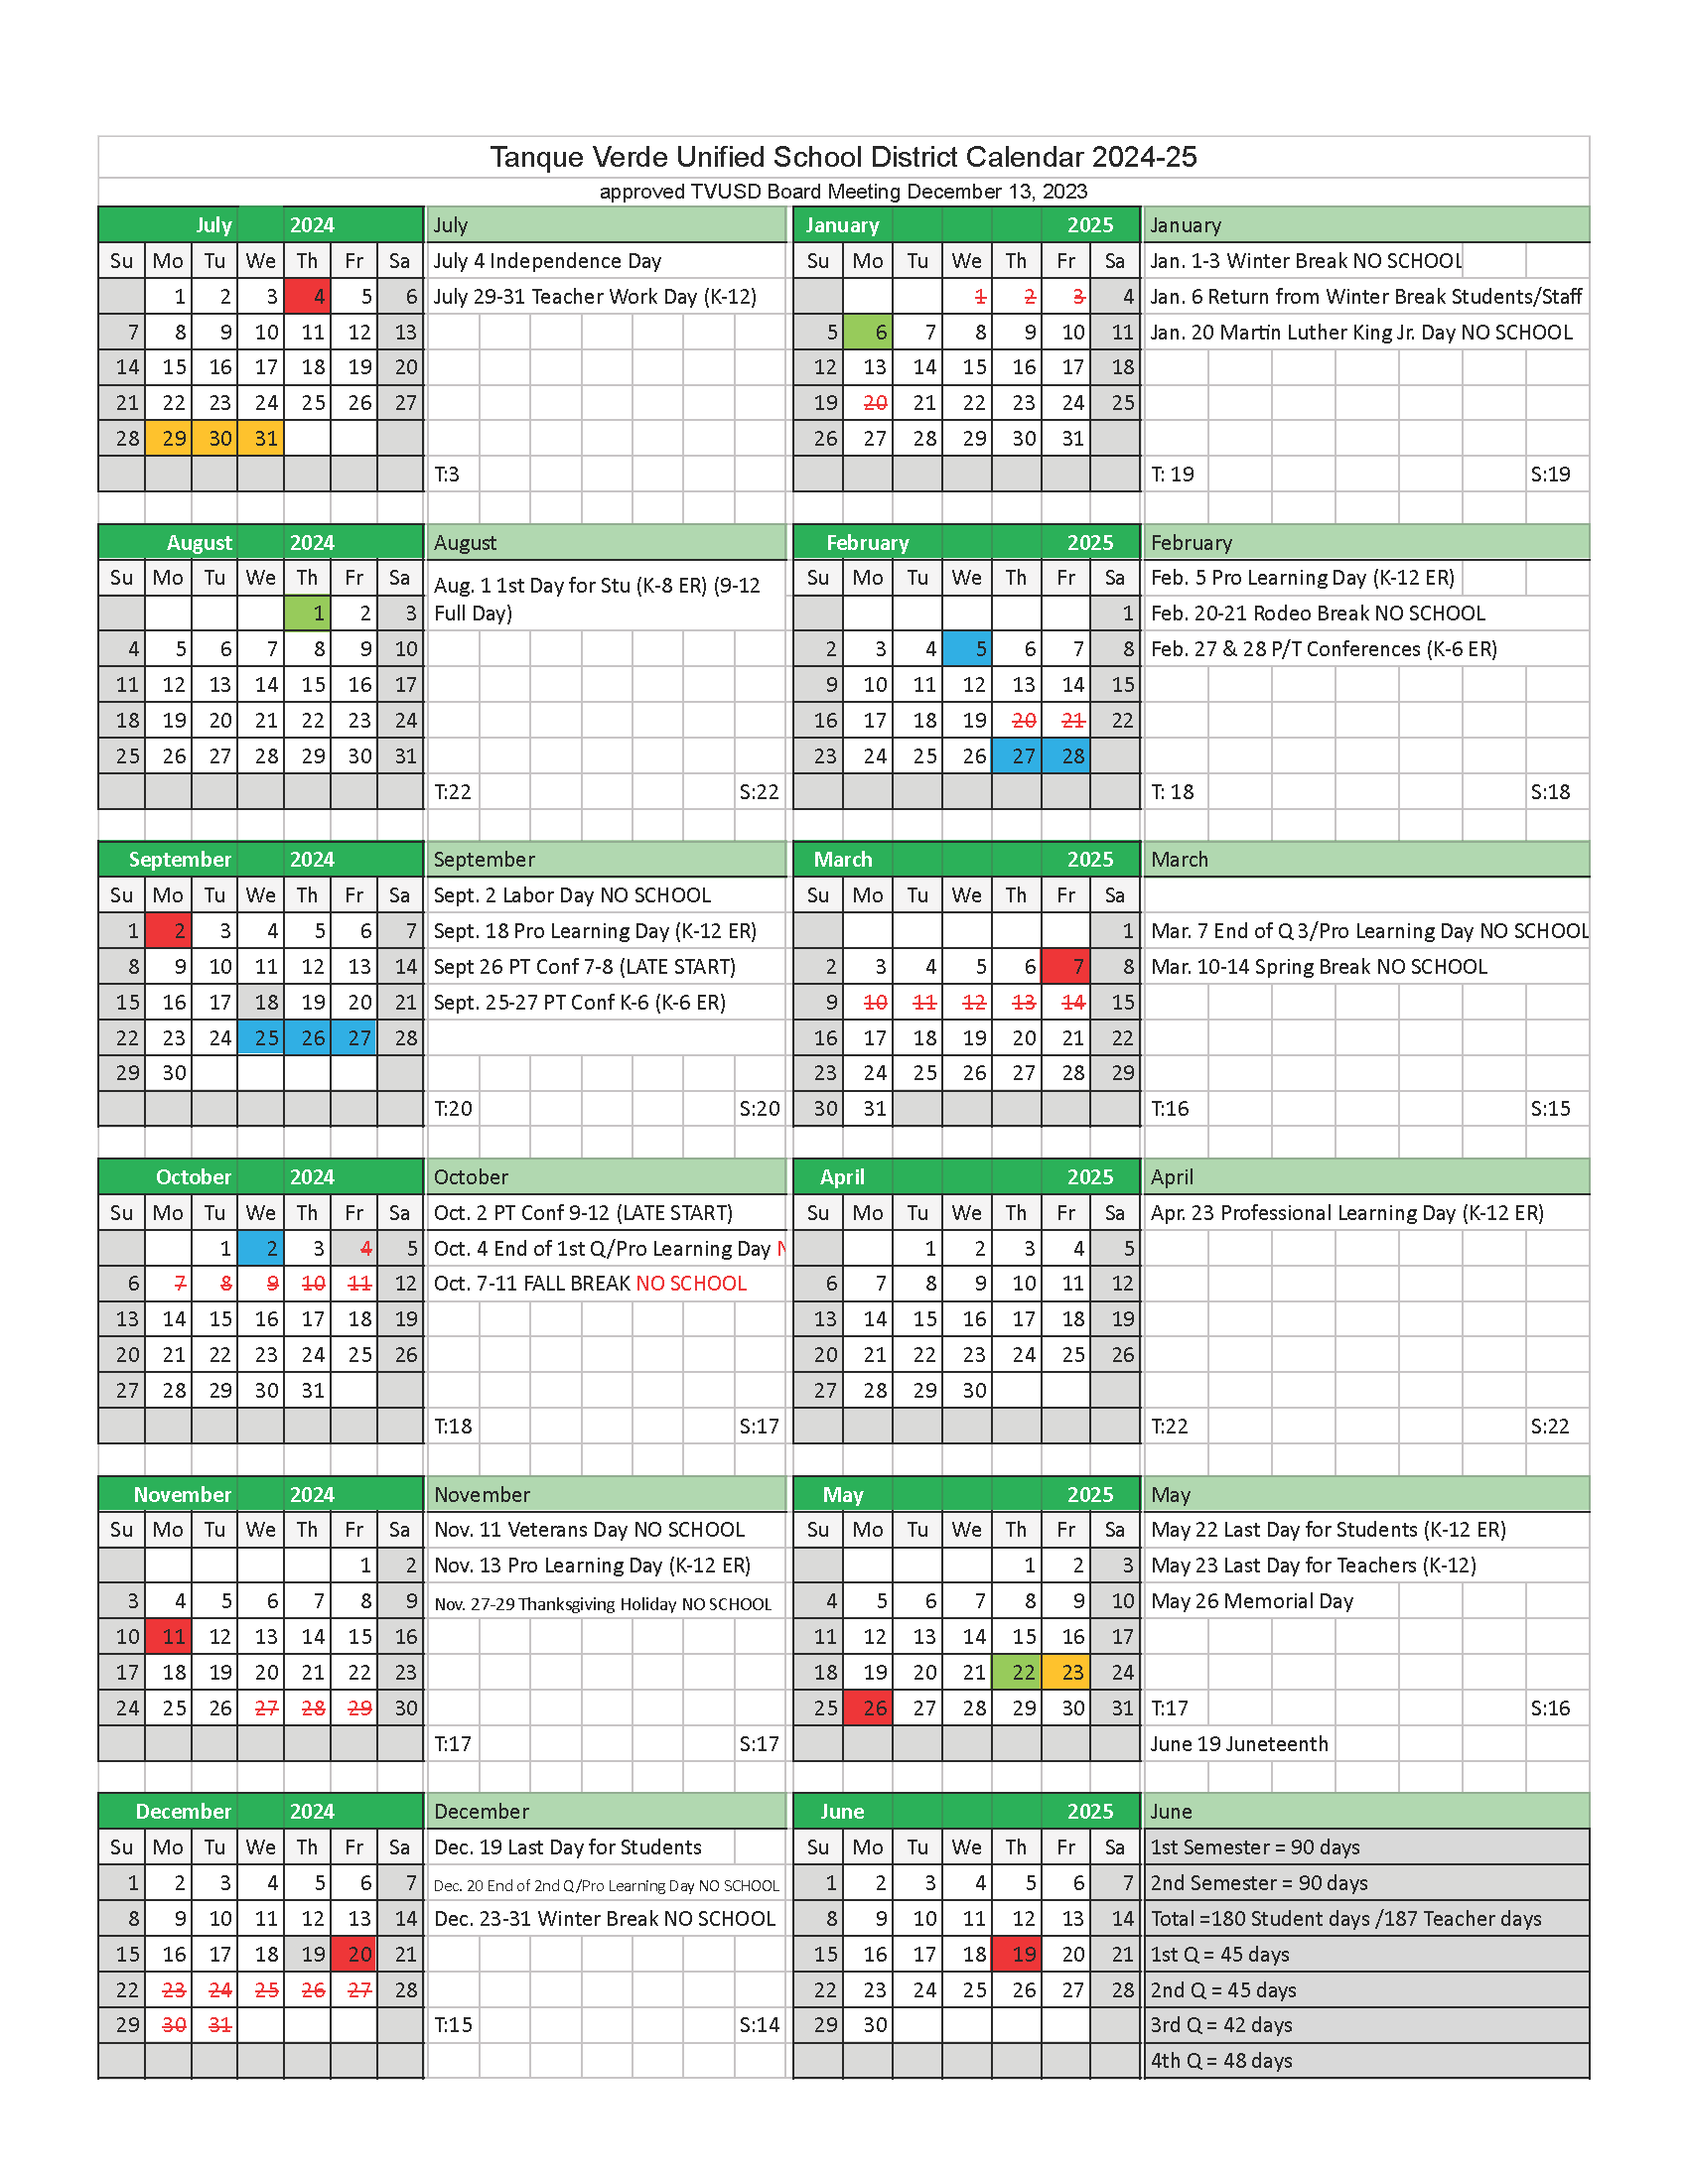 2024-25 TVUSD School Year Calendar